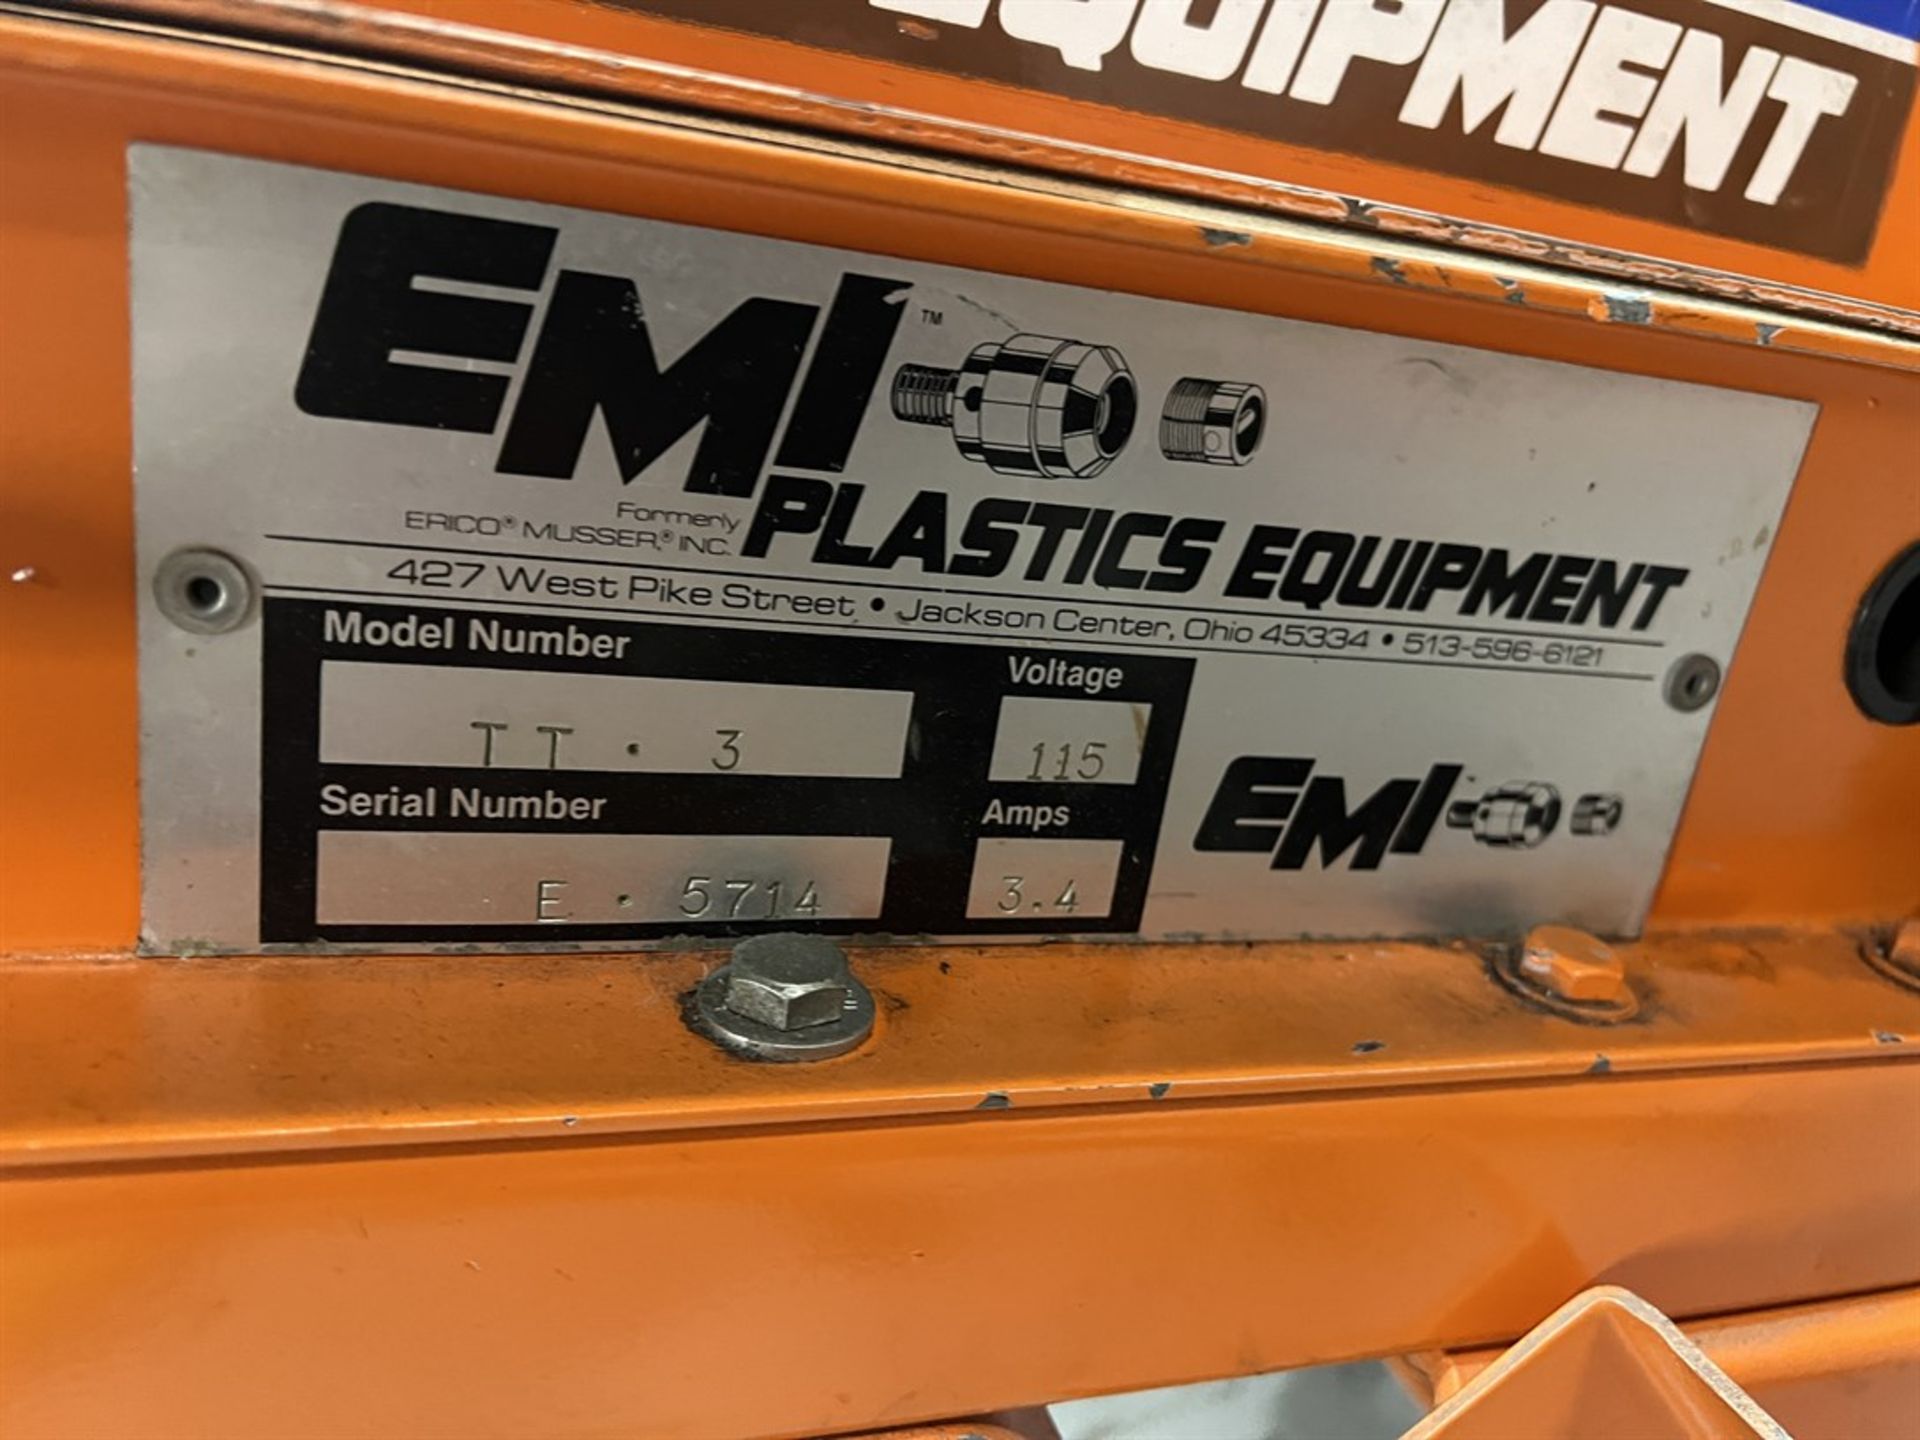 EMI PLASTICS TT-3 Power Incline Conveyor, s/n E-5714 - Image 3 of 3